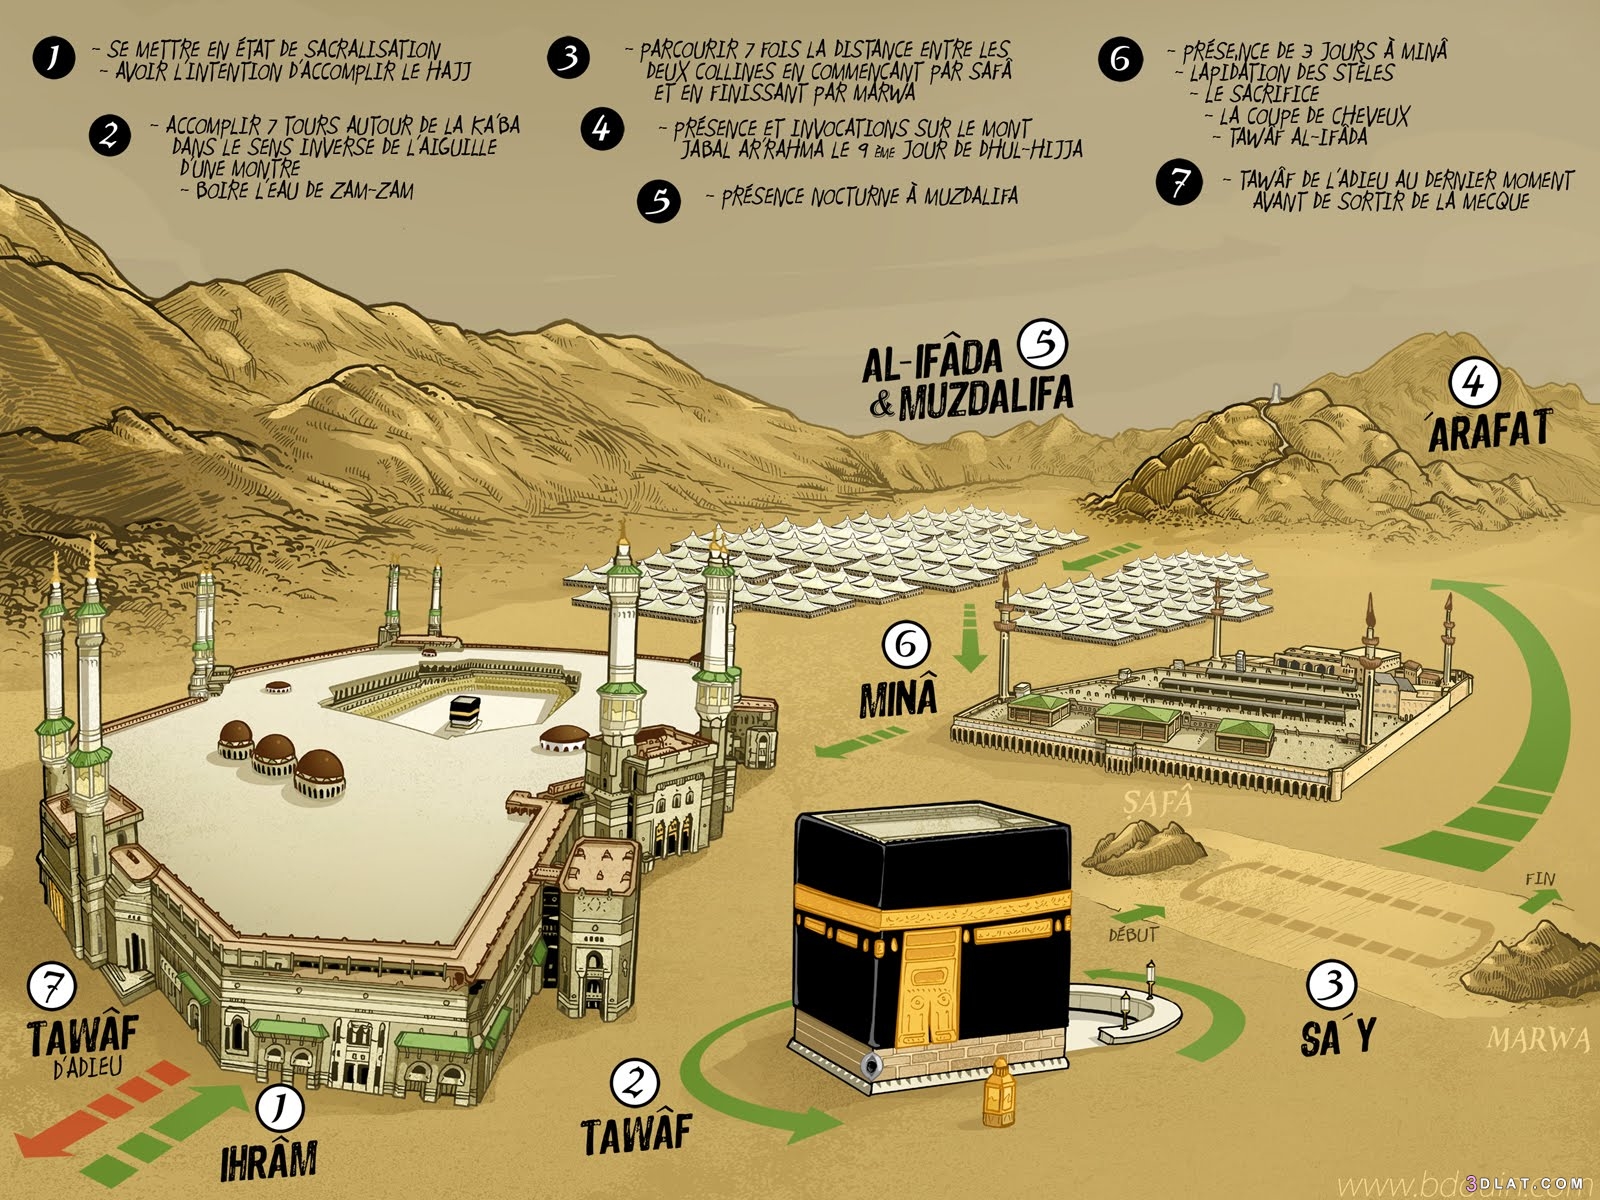 Description of Hajj